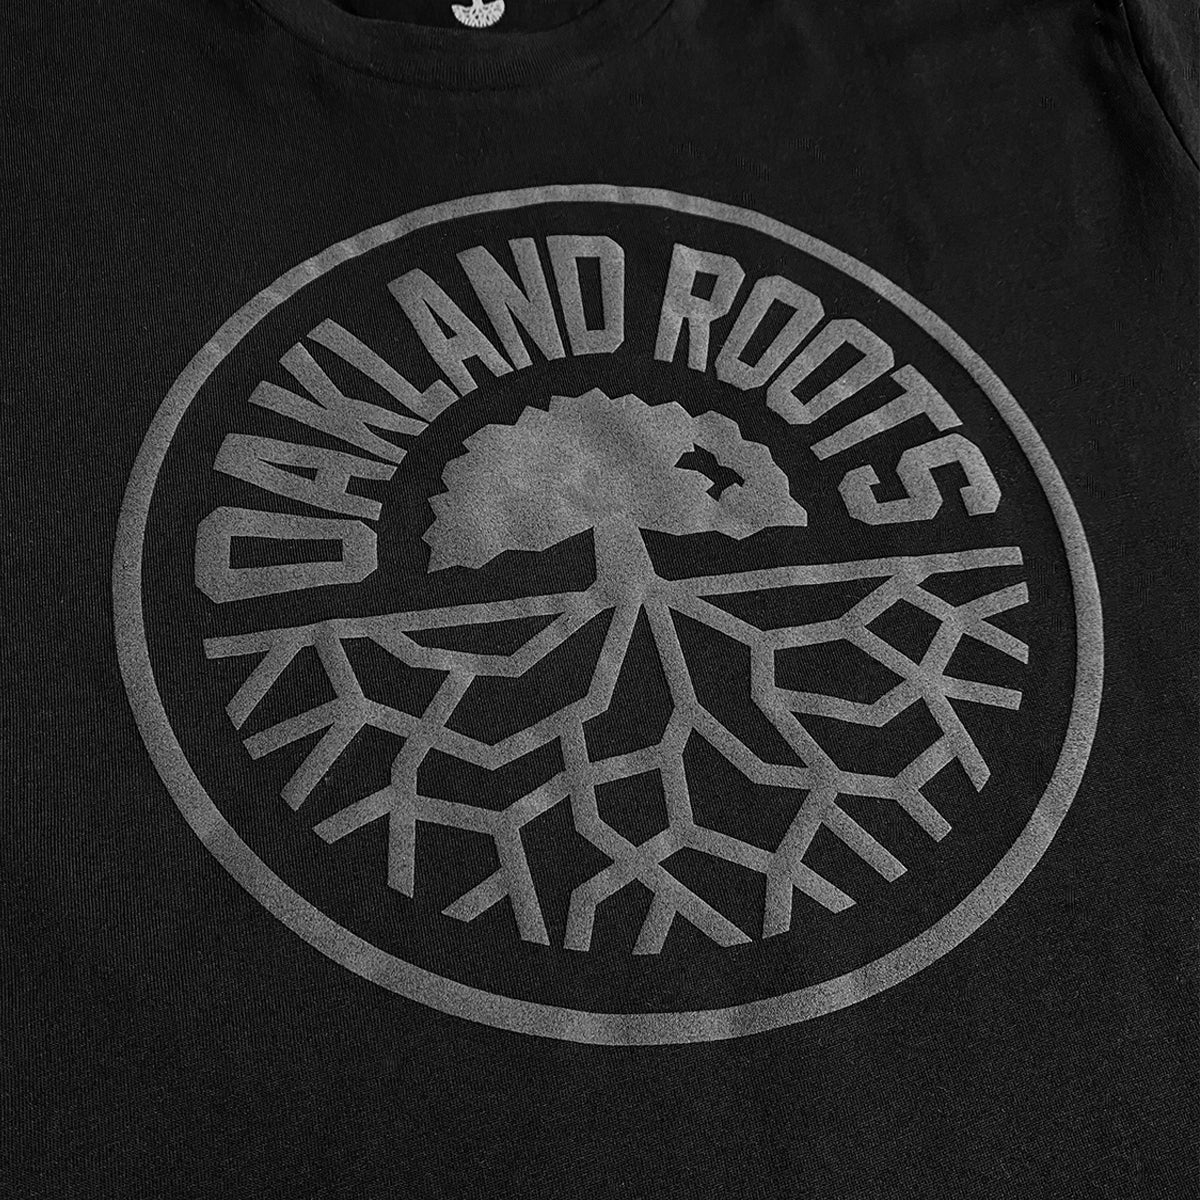 Close up of full circle black Roots SC logo on a black t-shirt.